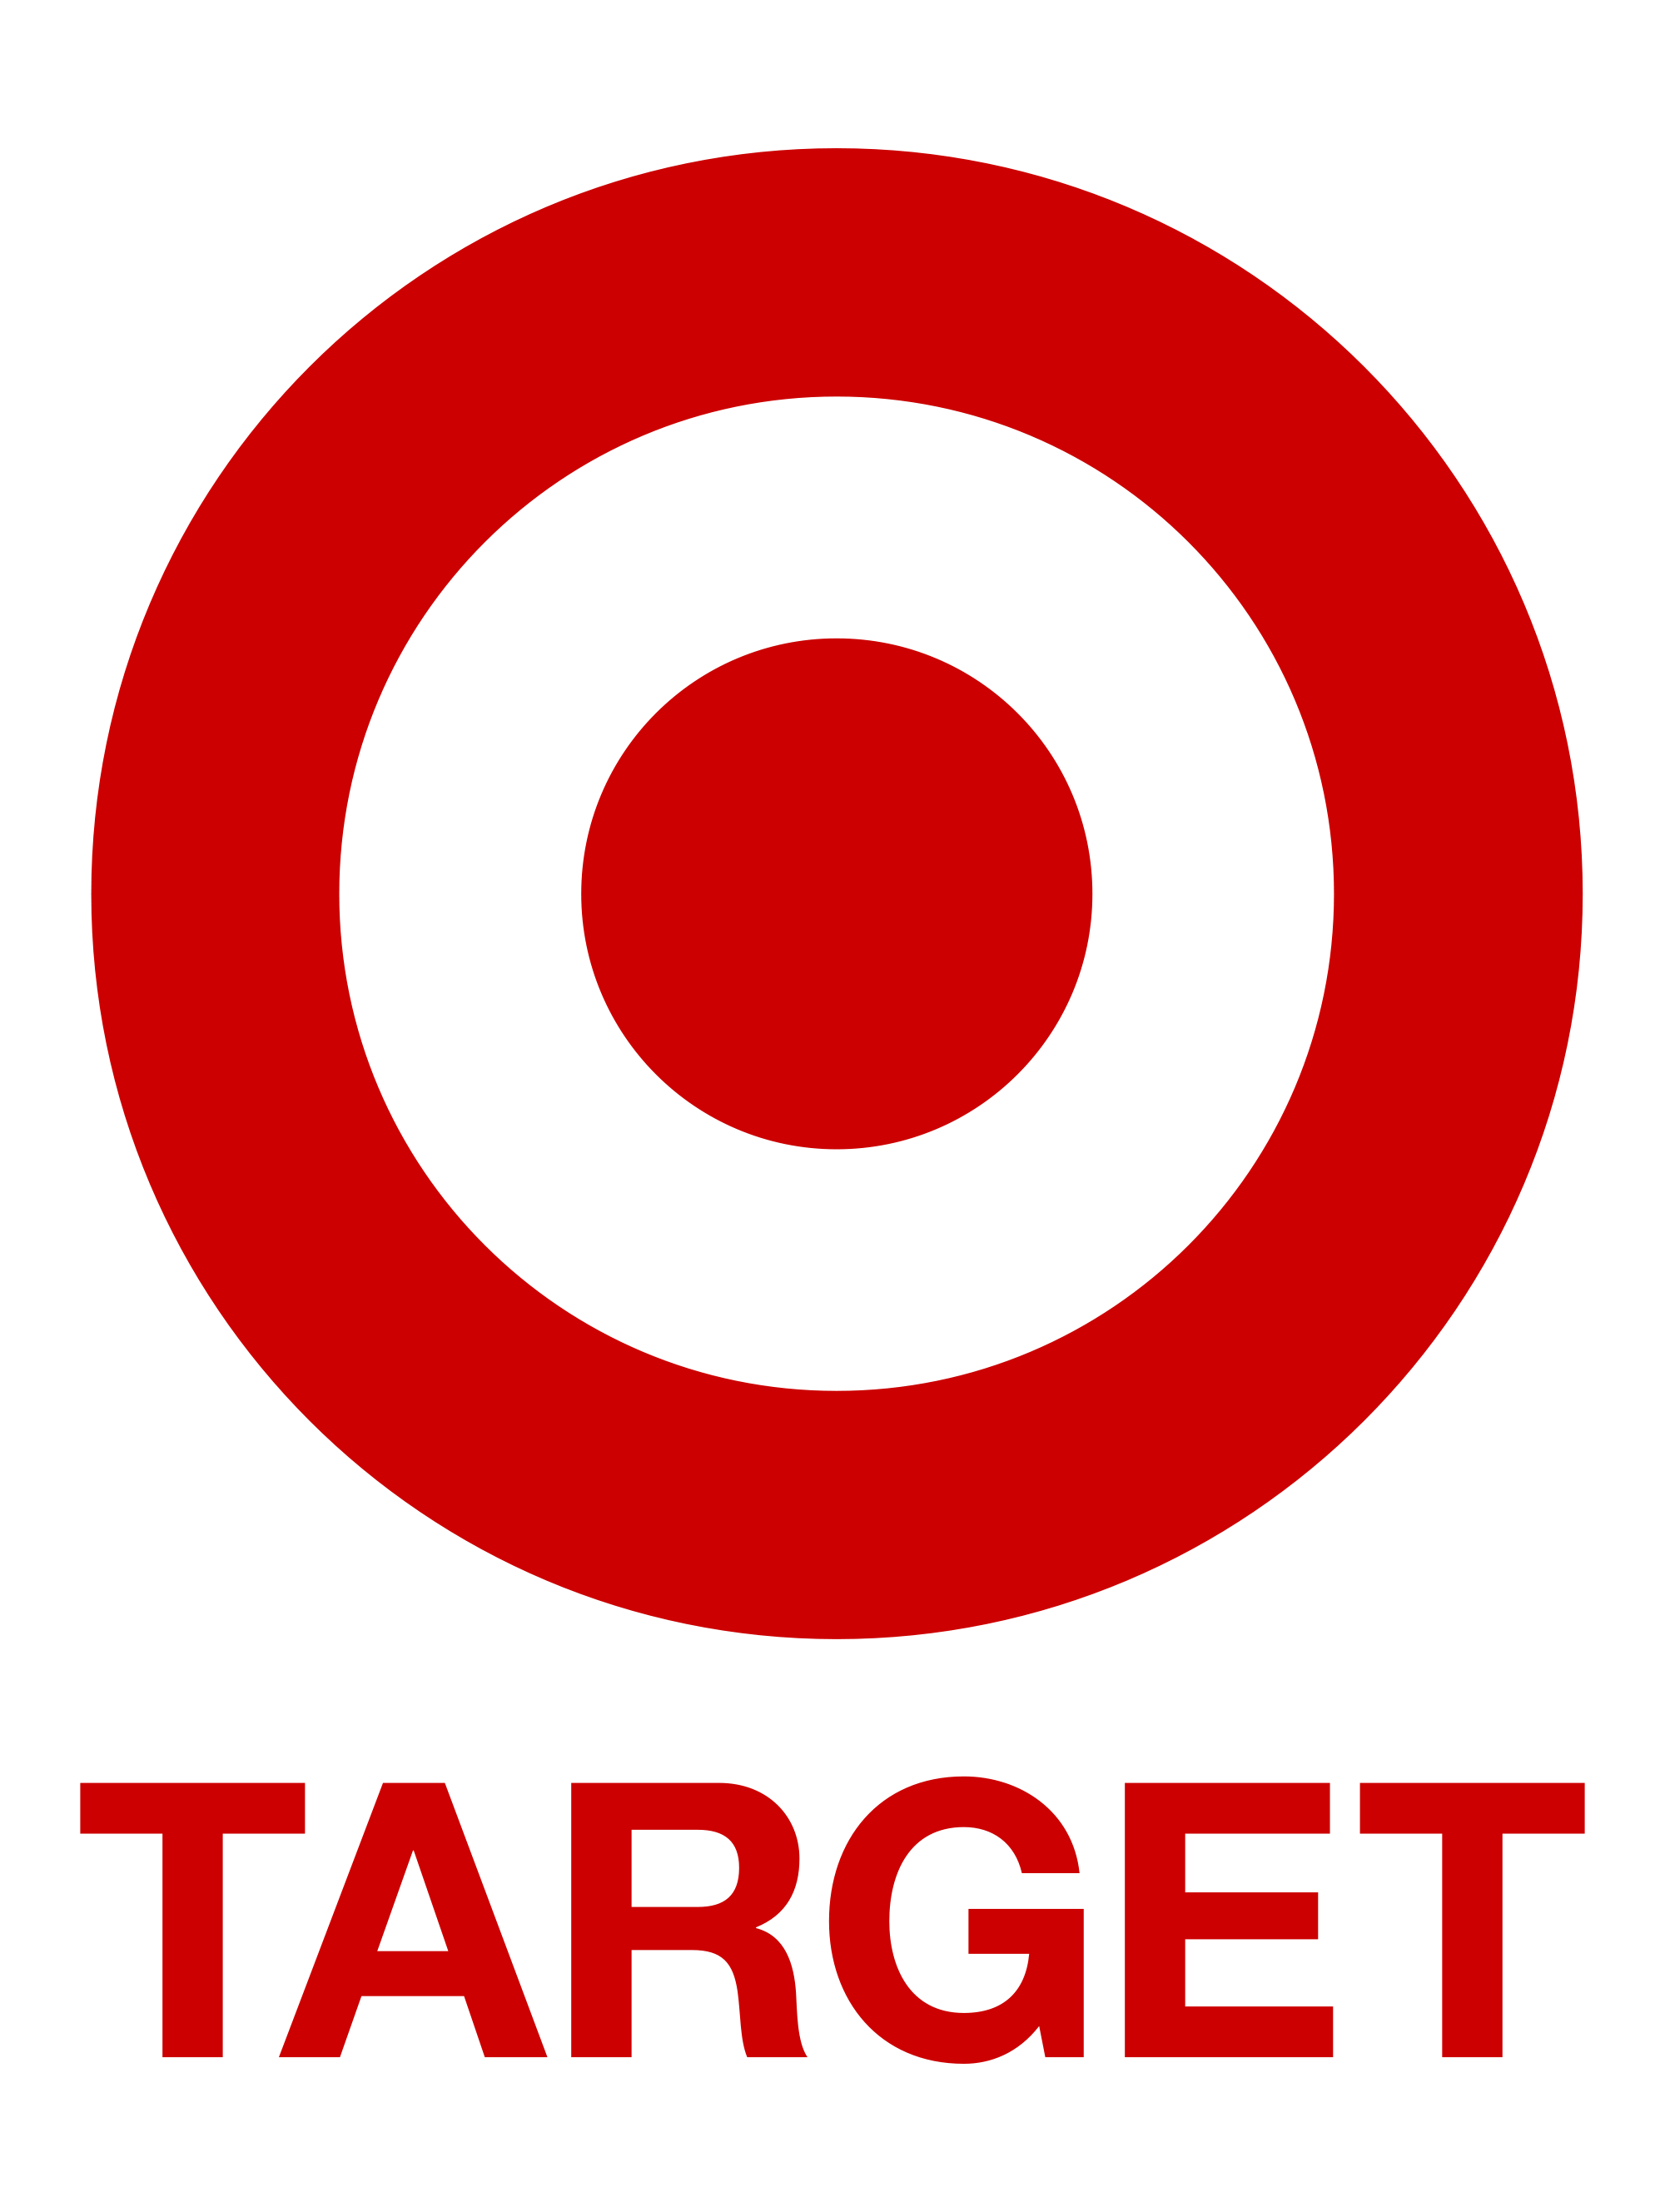 File:Target logo.svg